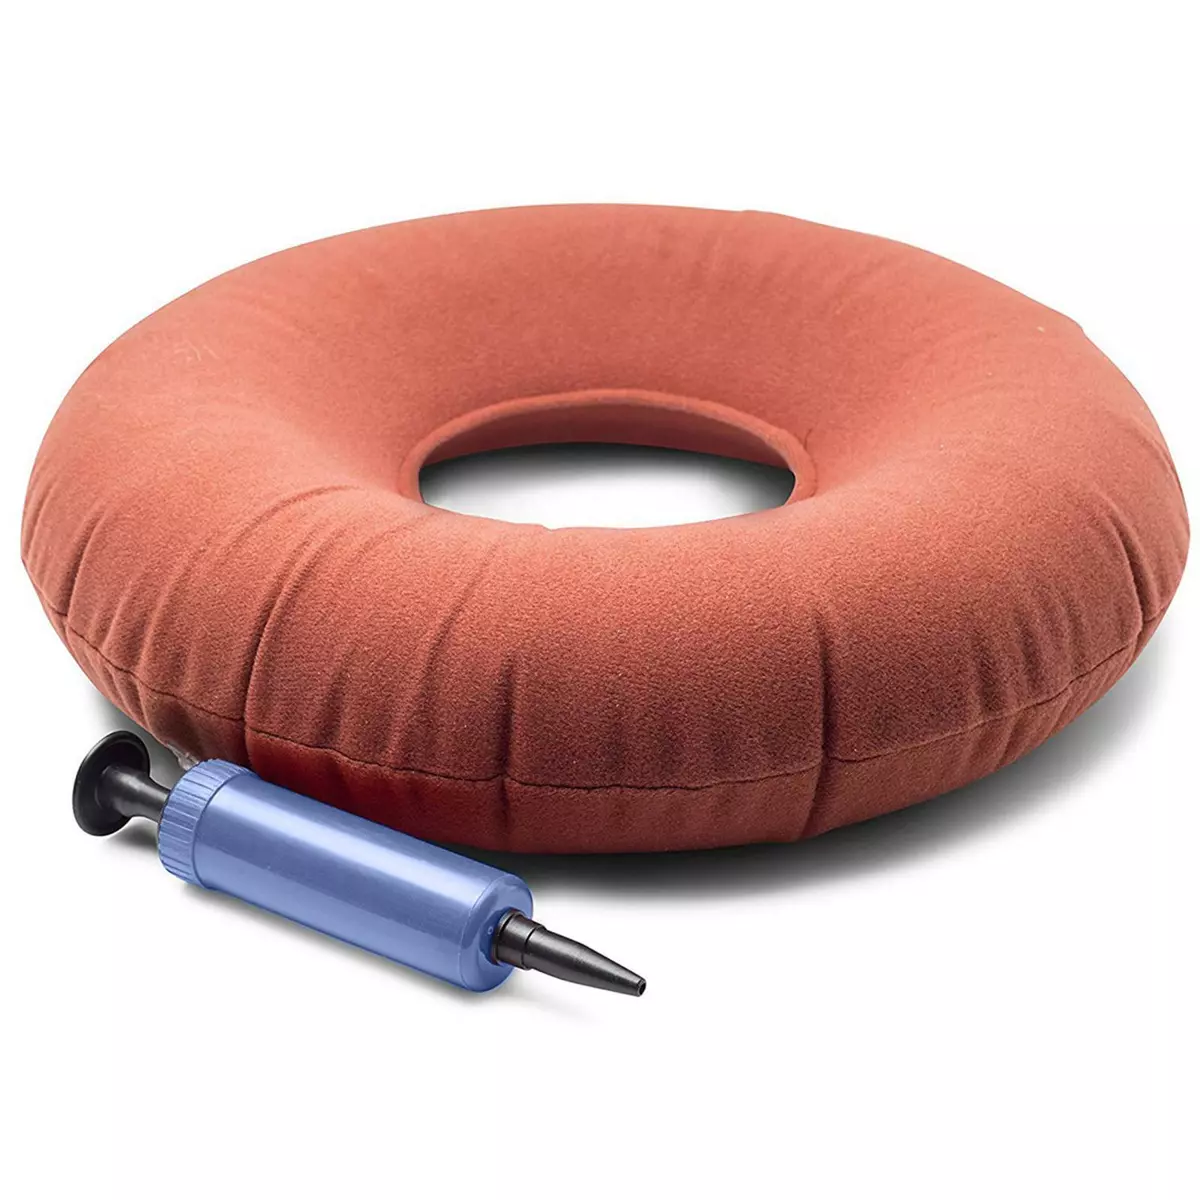 Donut Pillow Tailbone Hemorrhoid Cushion Pain for The Elderly Light 